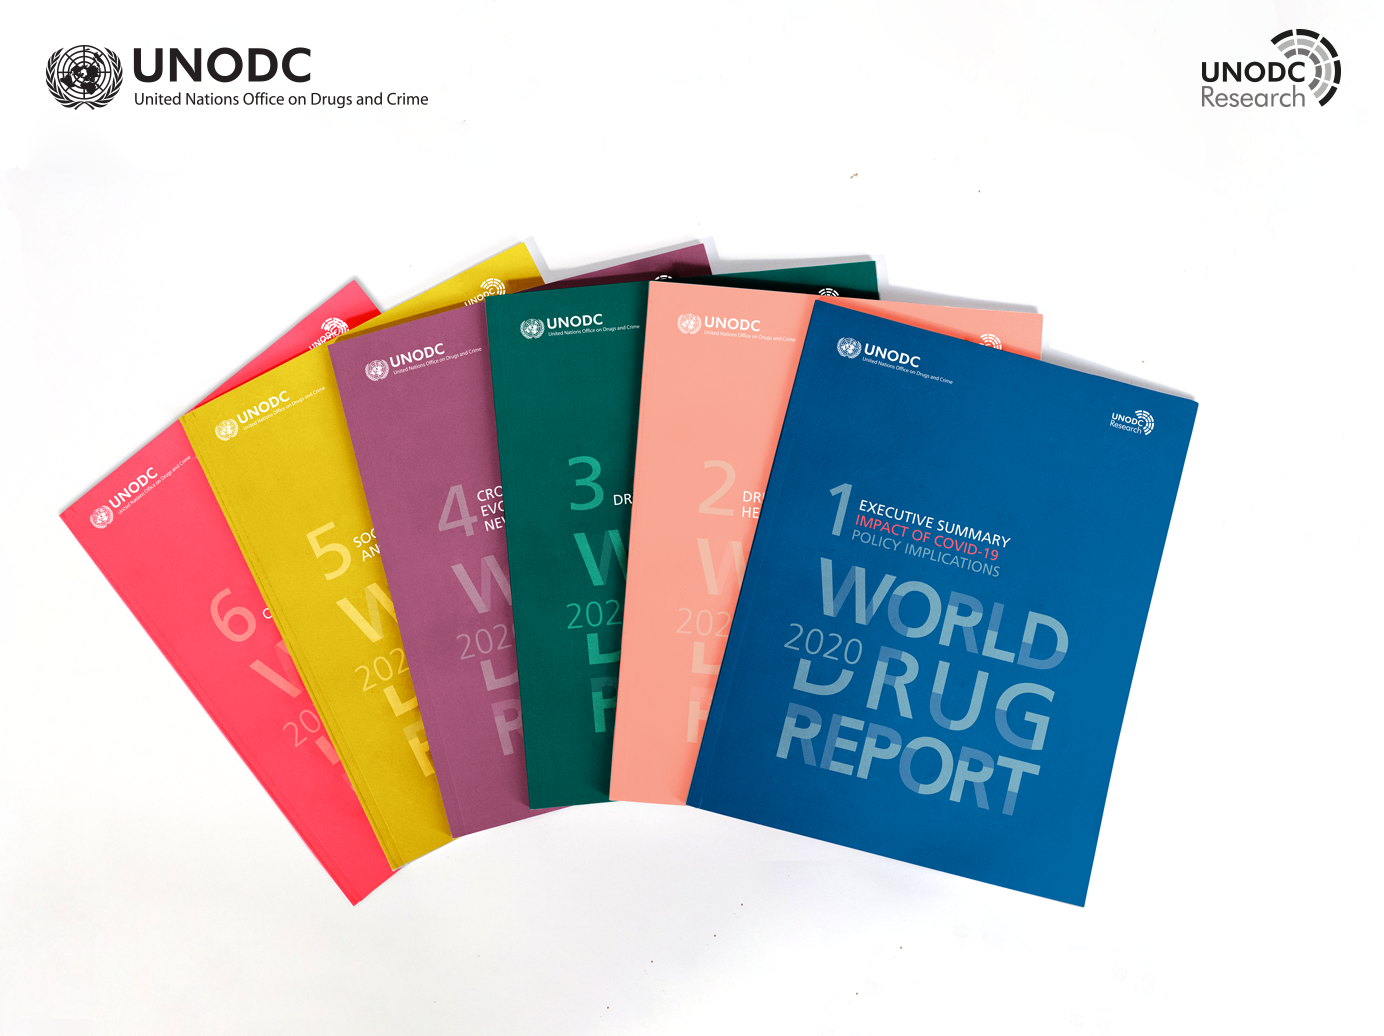 WORLD DRUG REPORT 2020 (Foto: UNODC)